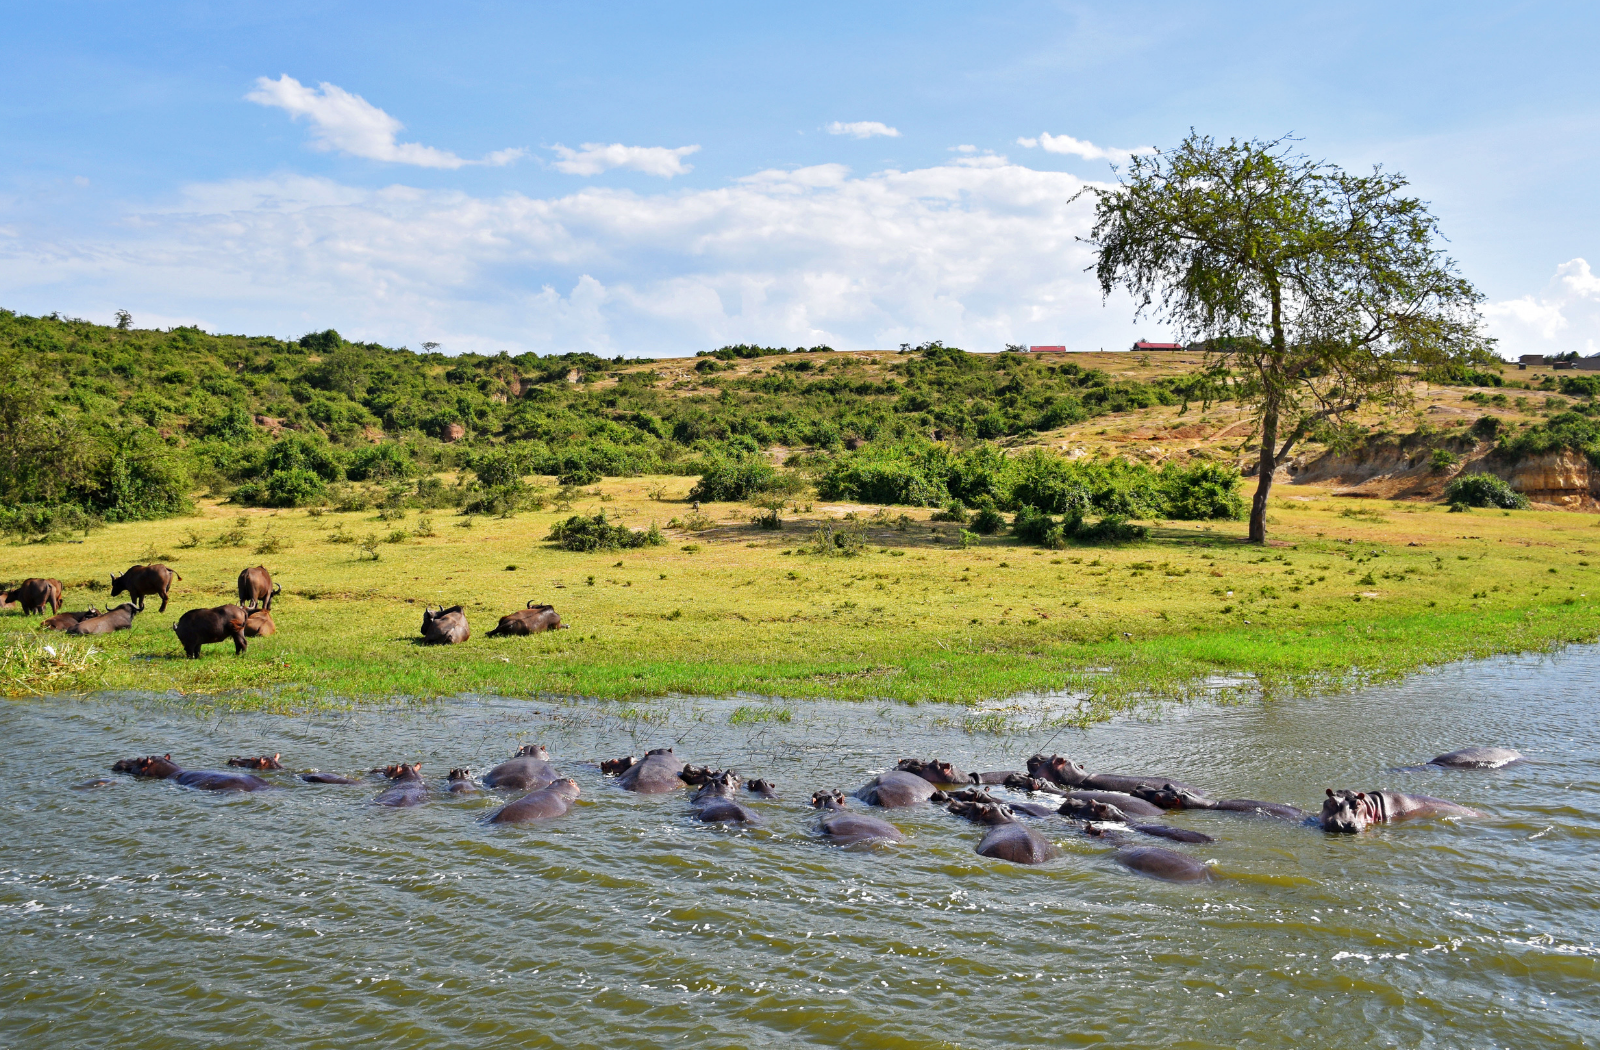 Hippo at Queen Elizabeth National Park, Uganda